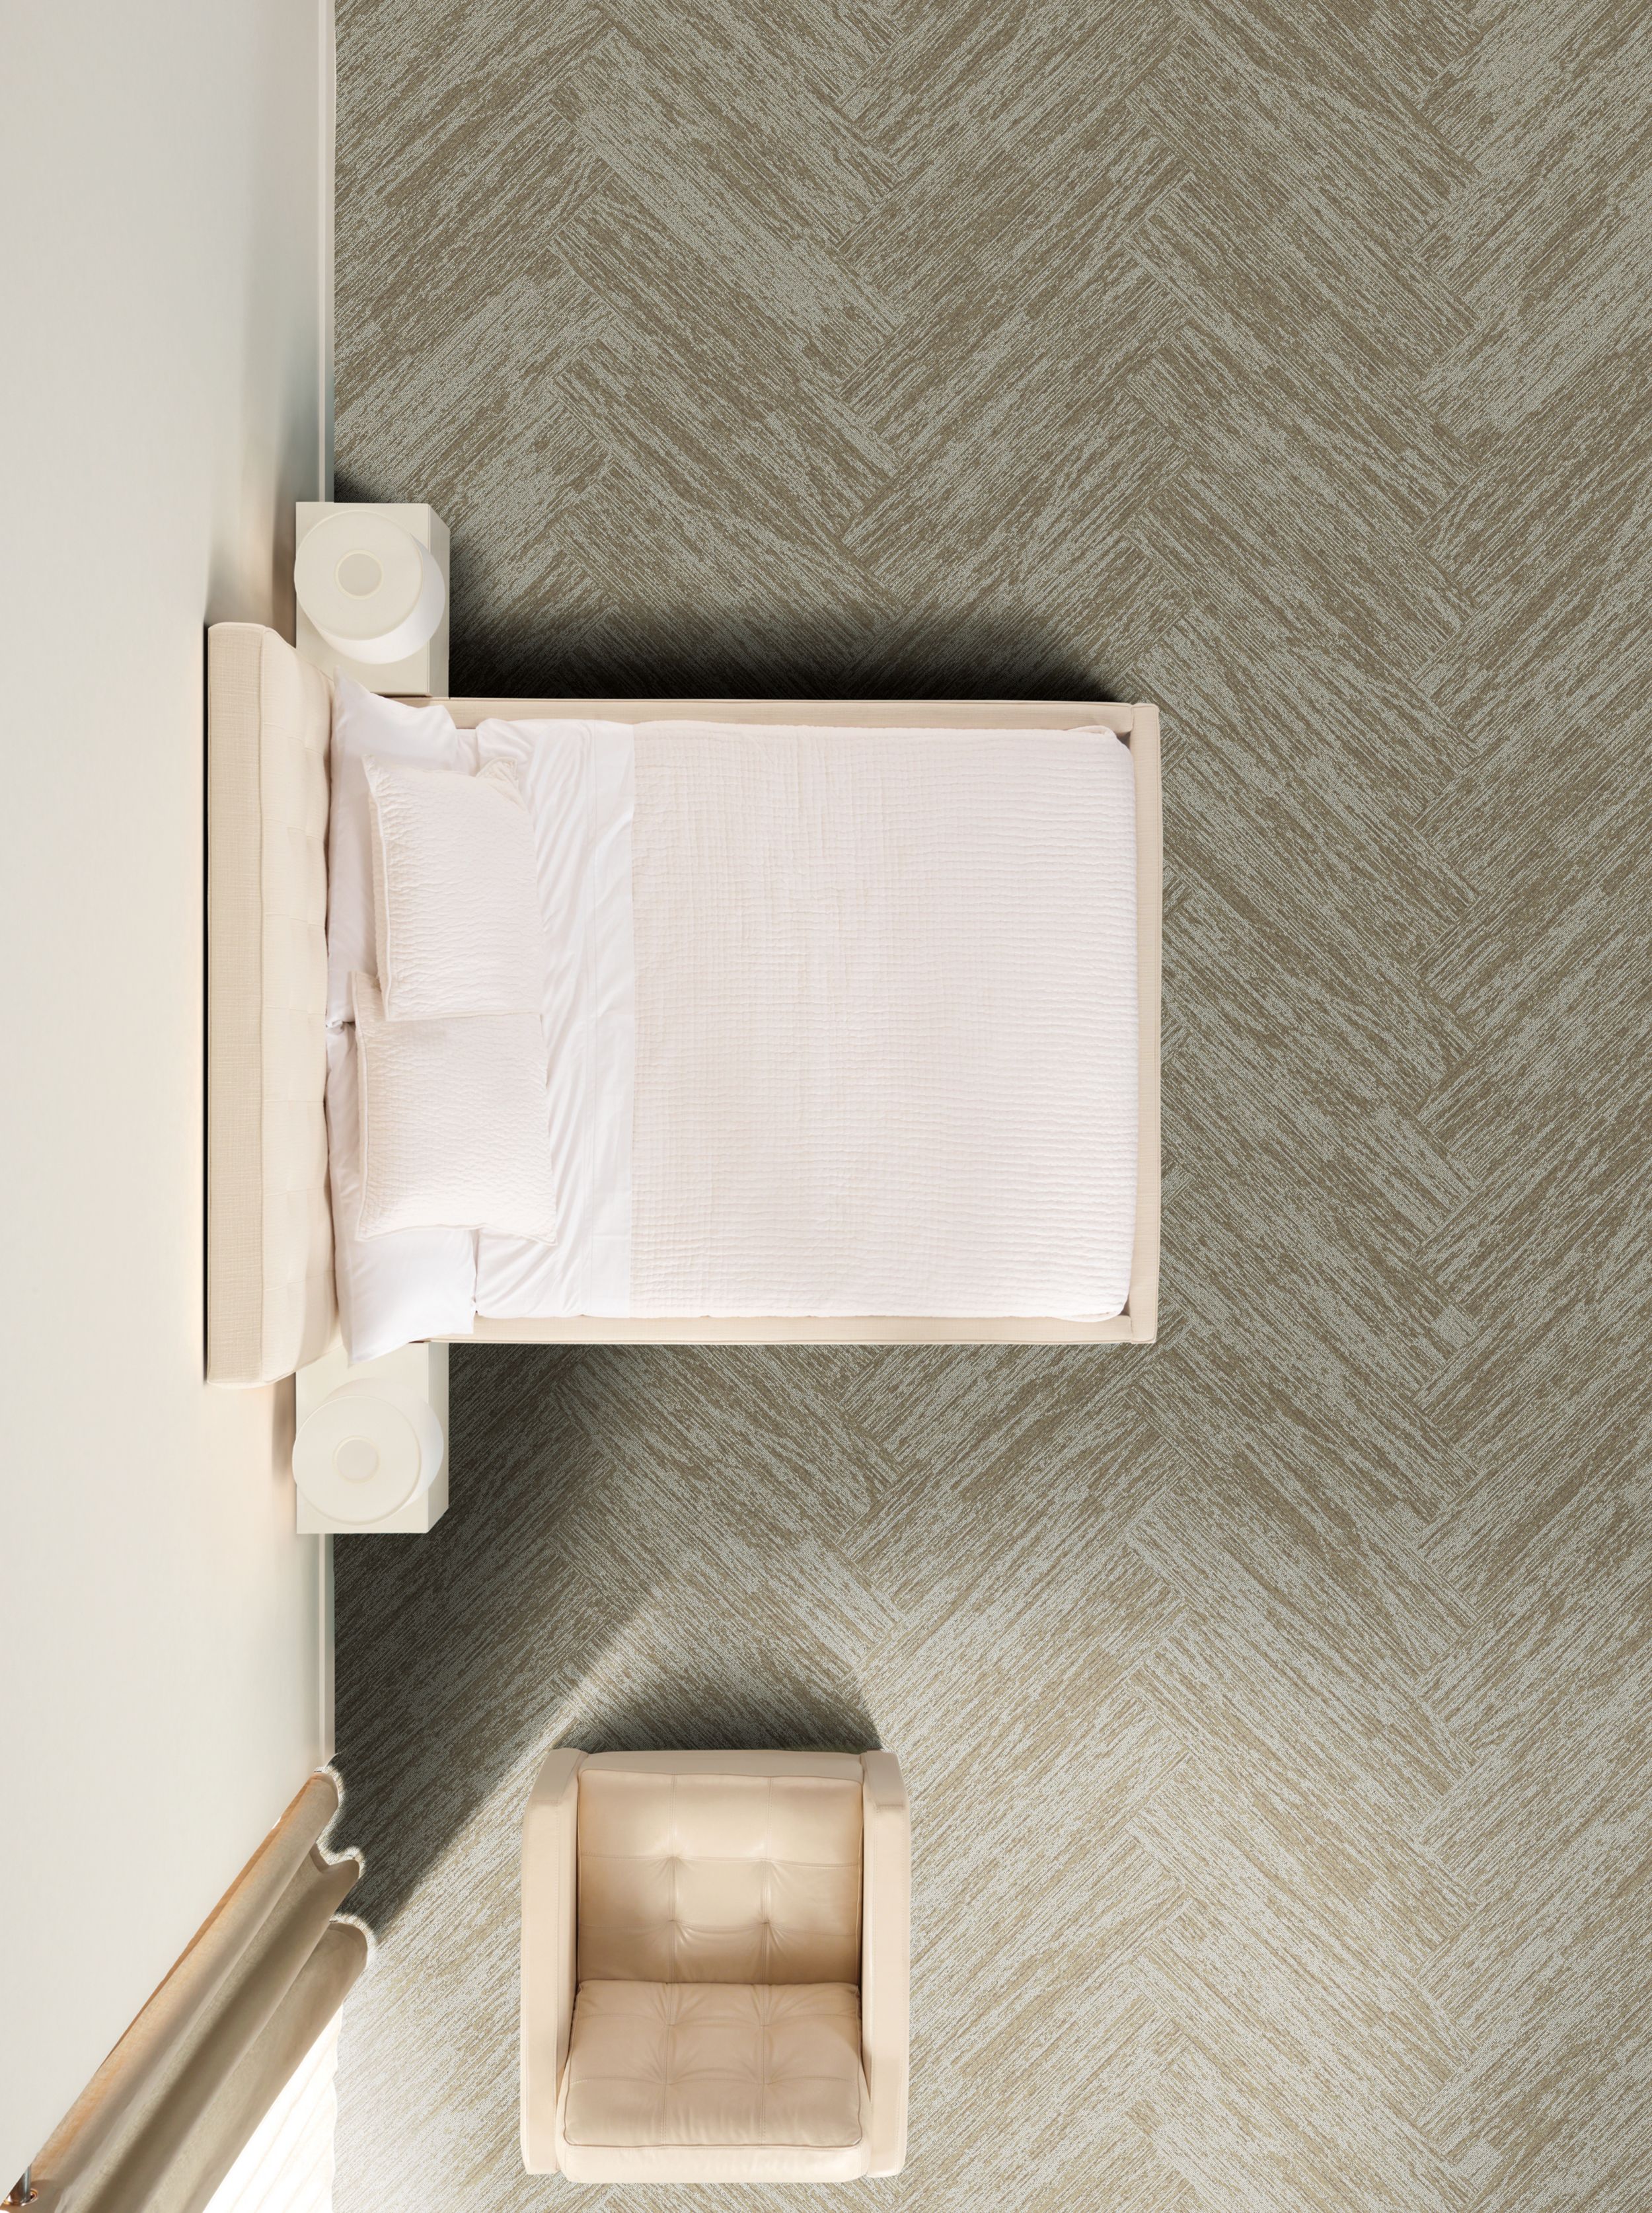 Interface RMS 507 plank carpet tile in hotel guest room imagen número 8